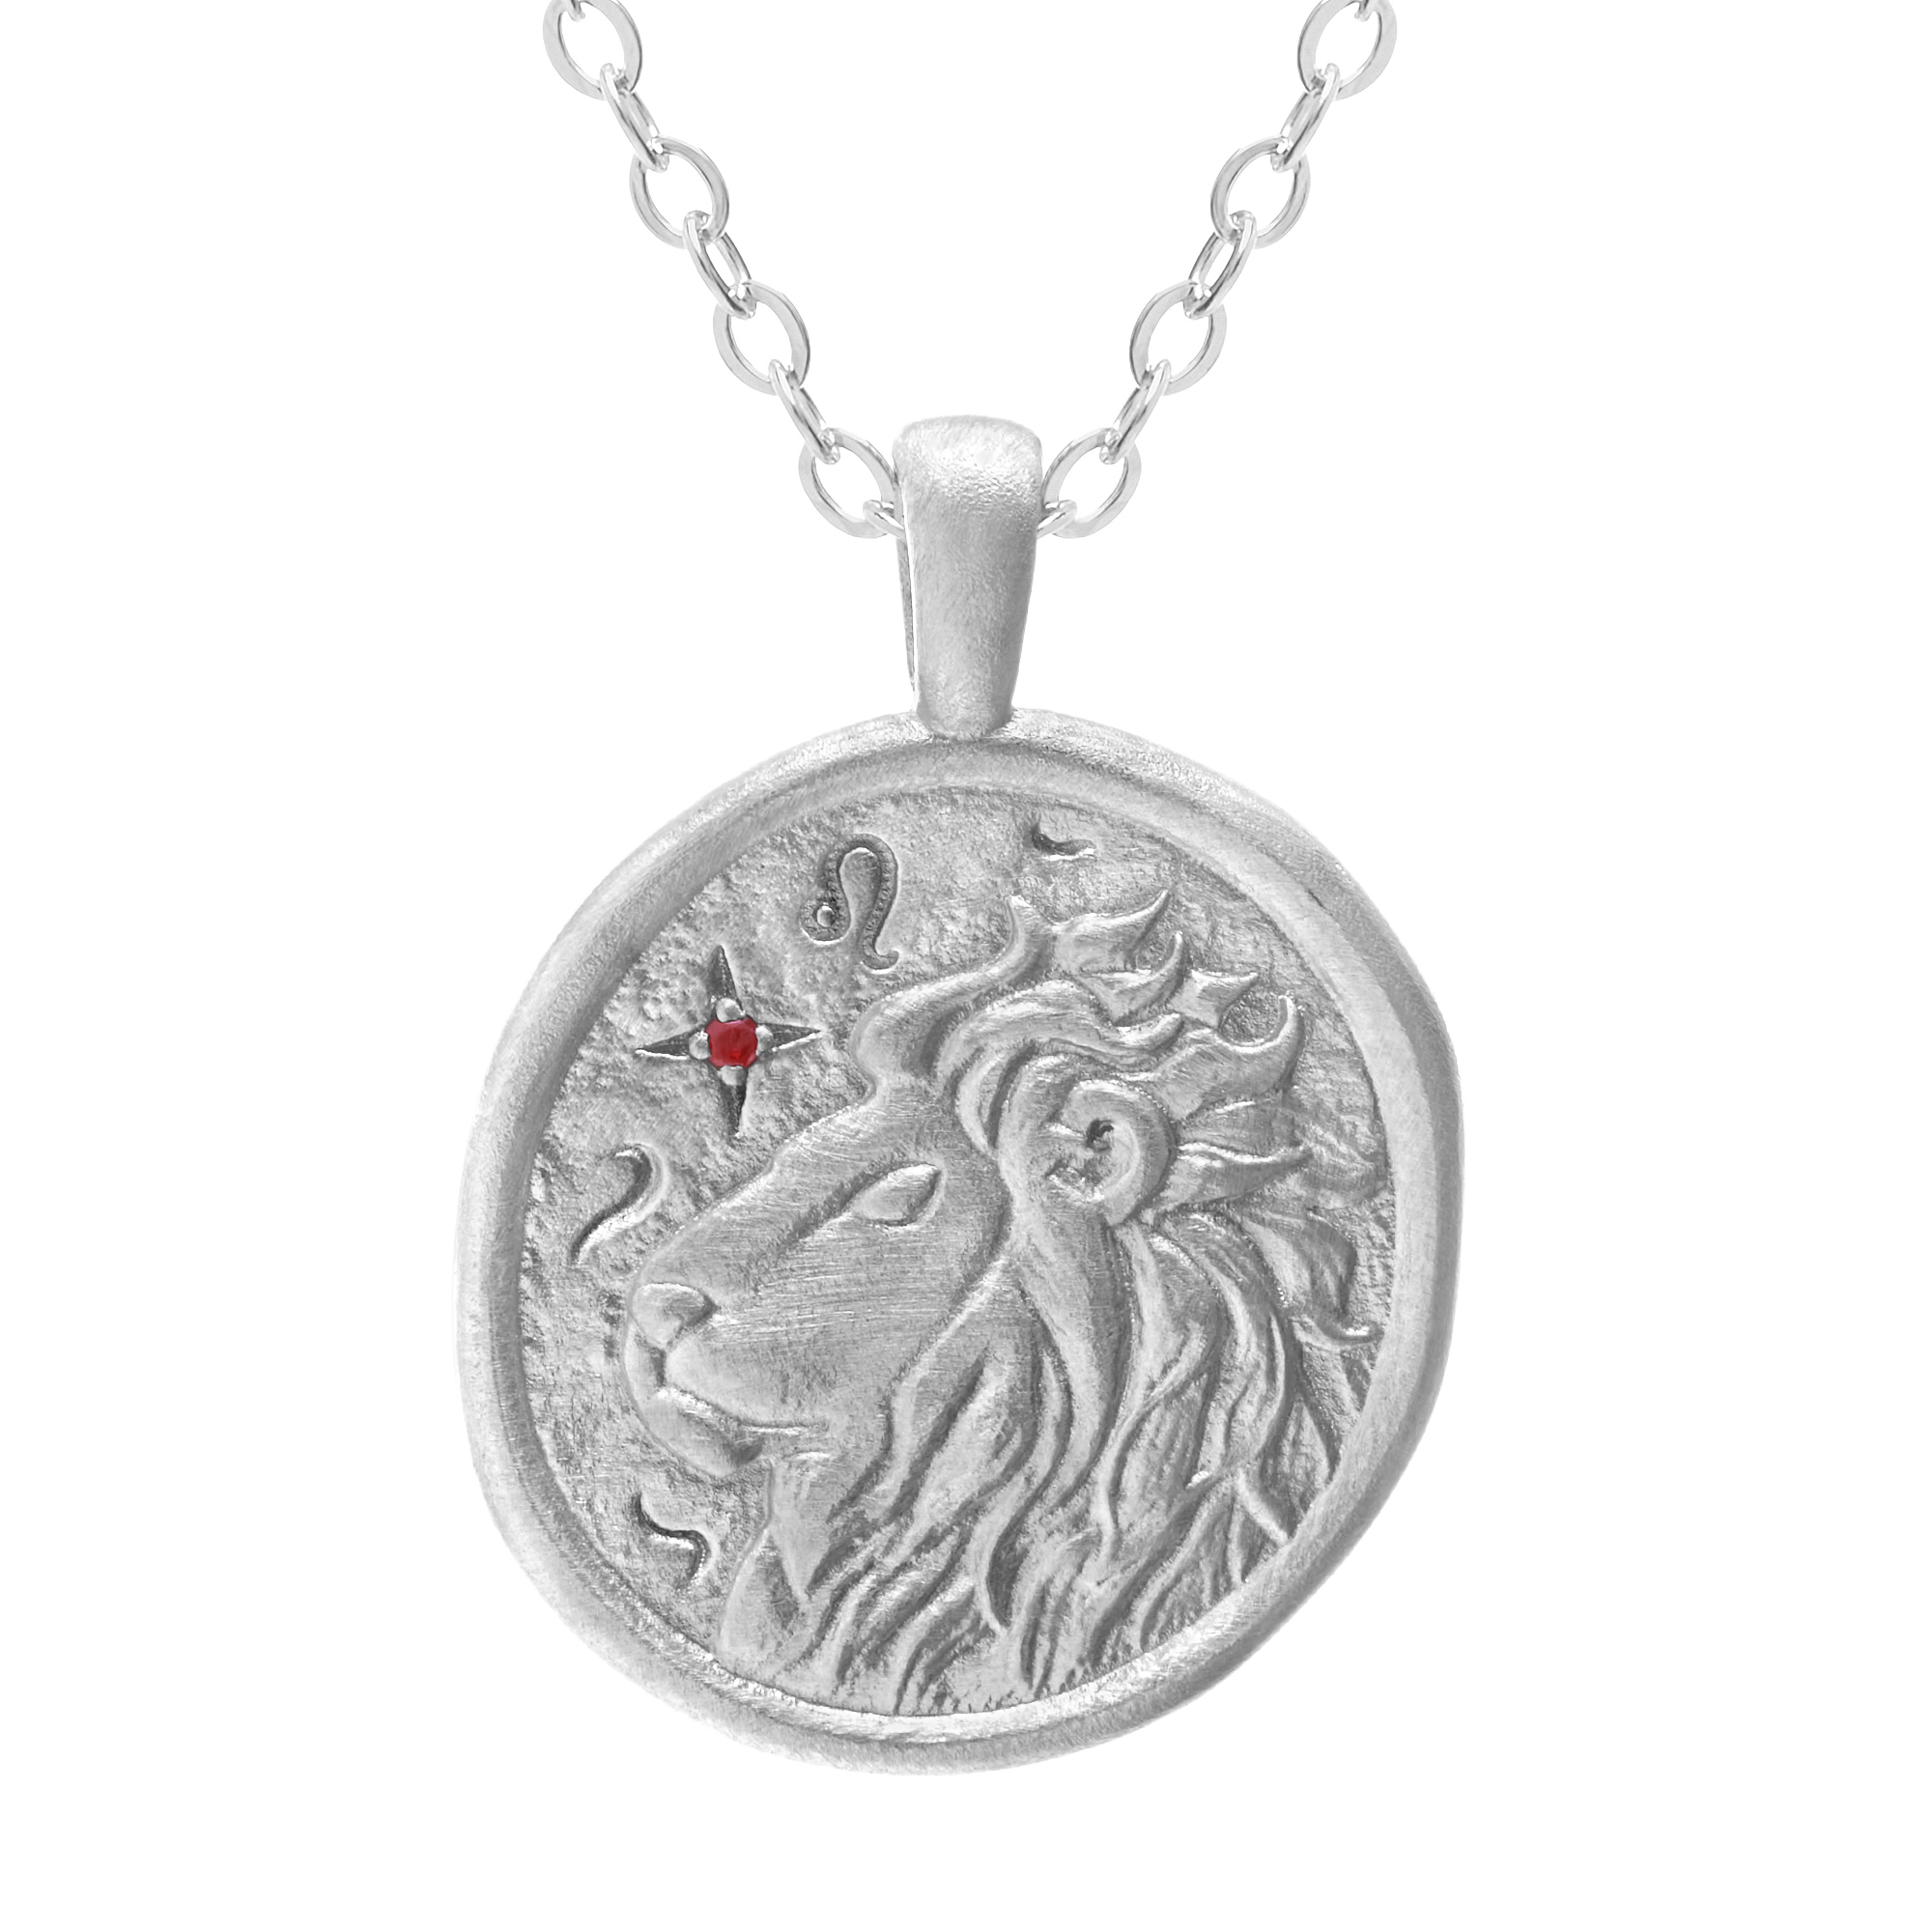 Колье знак зодиака «Лев» из серебра от магазина LunaLu